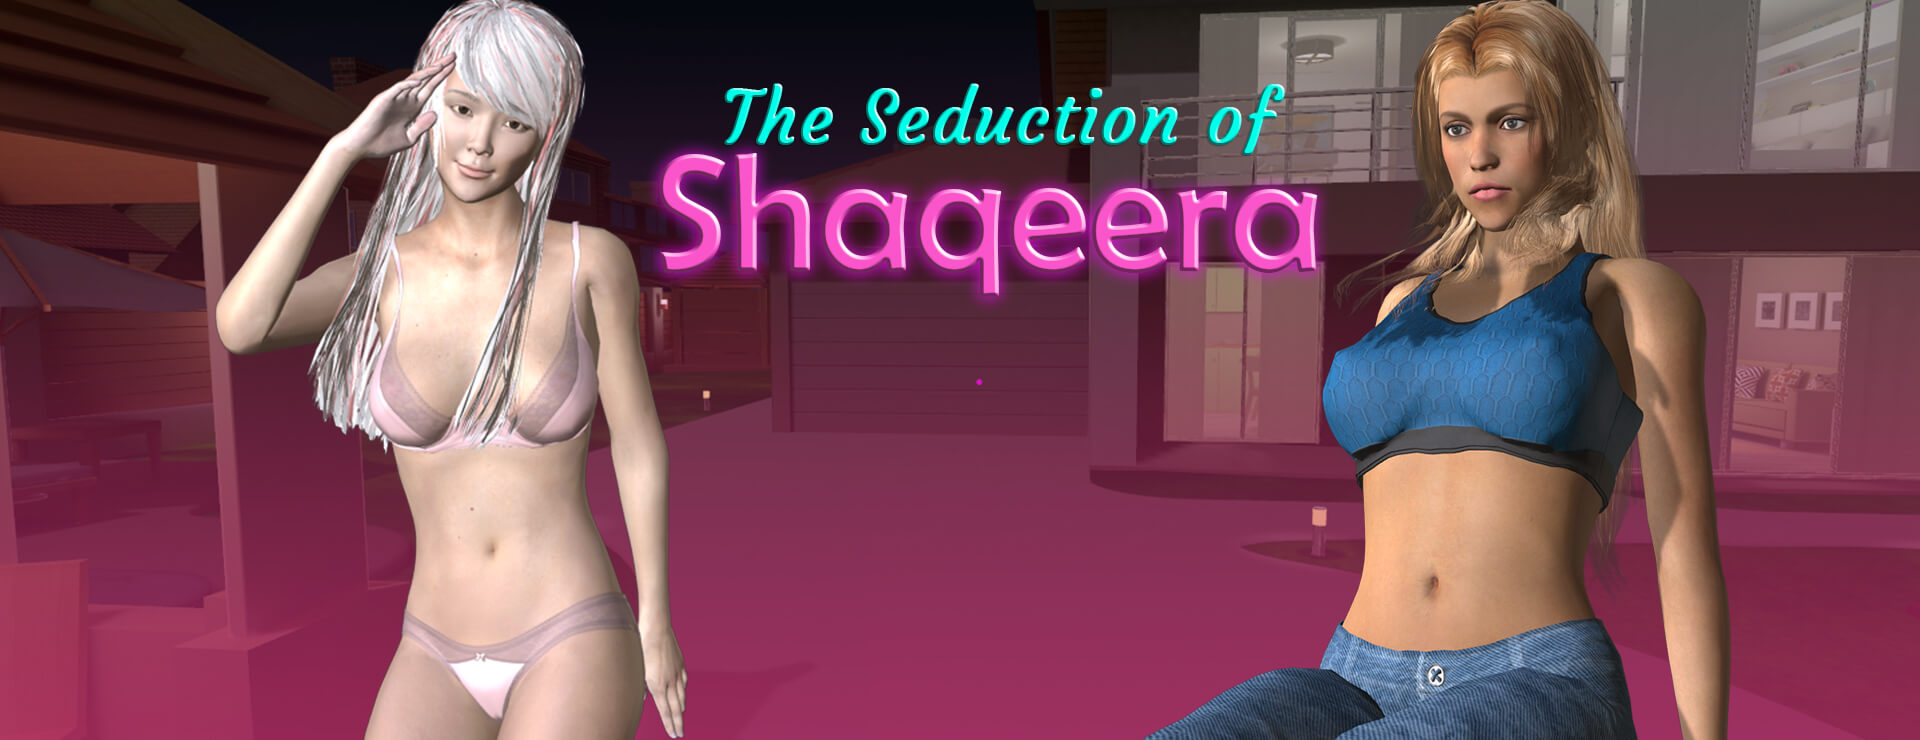 The Seduction Of Shaqeera - Action Adventure Game